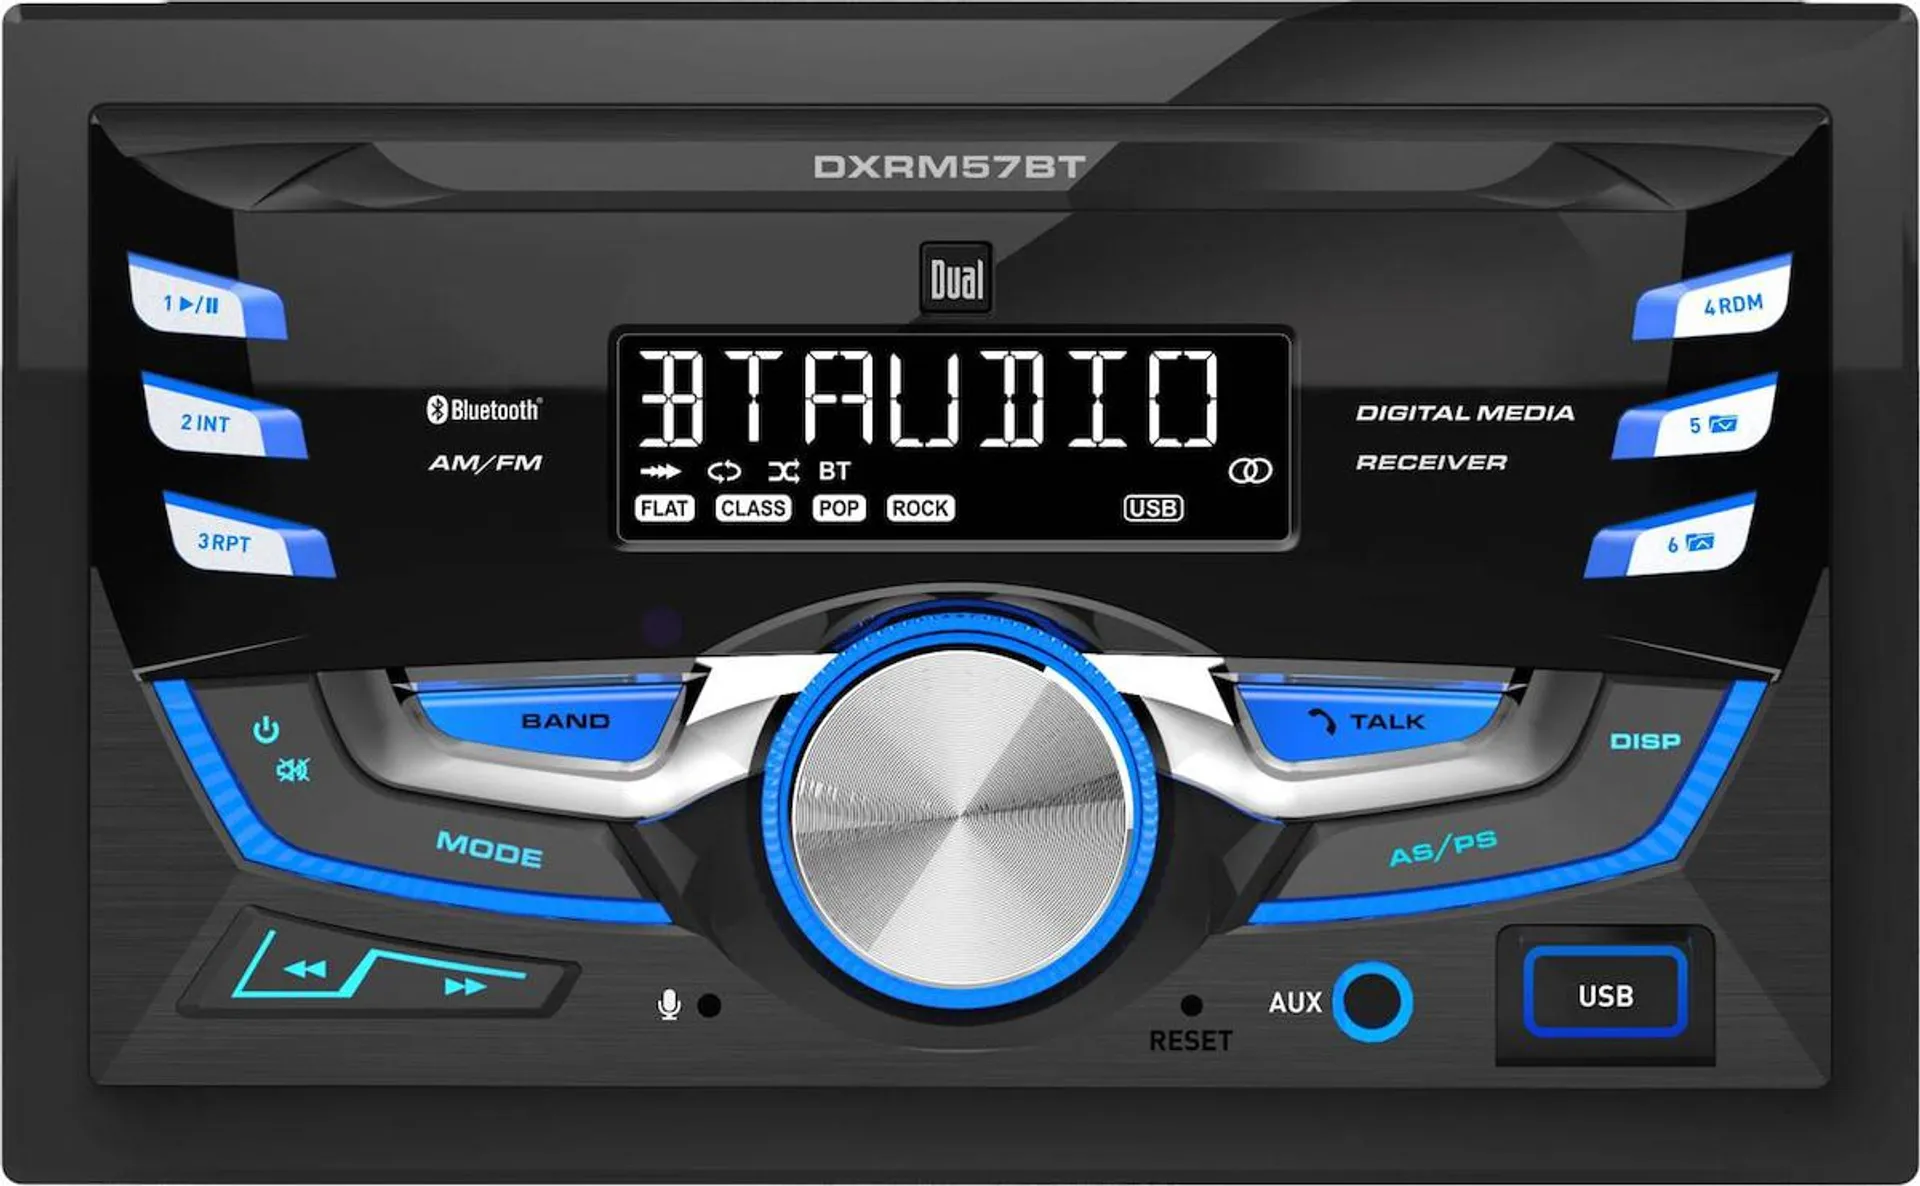 Dual Audio 200 Watt Car Stereo - DXRM57BT